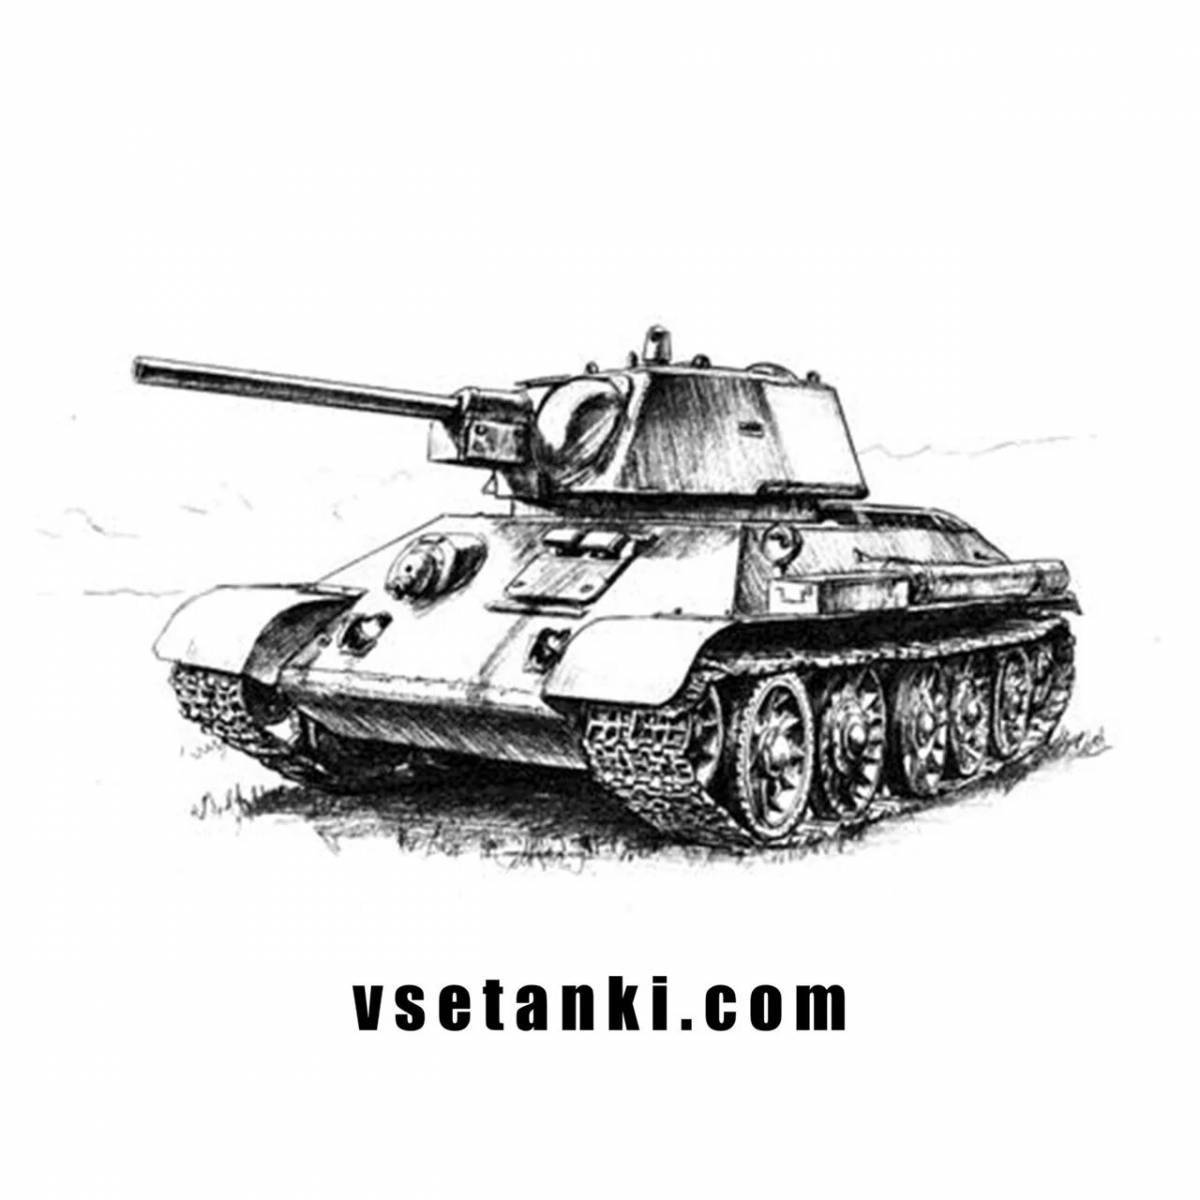 Colouring for spectacular medium tank t 34